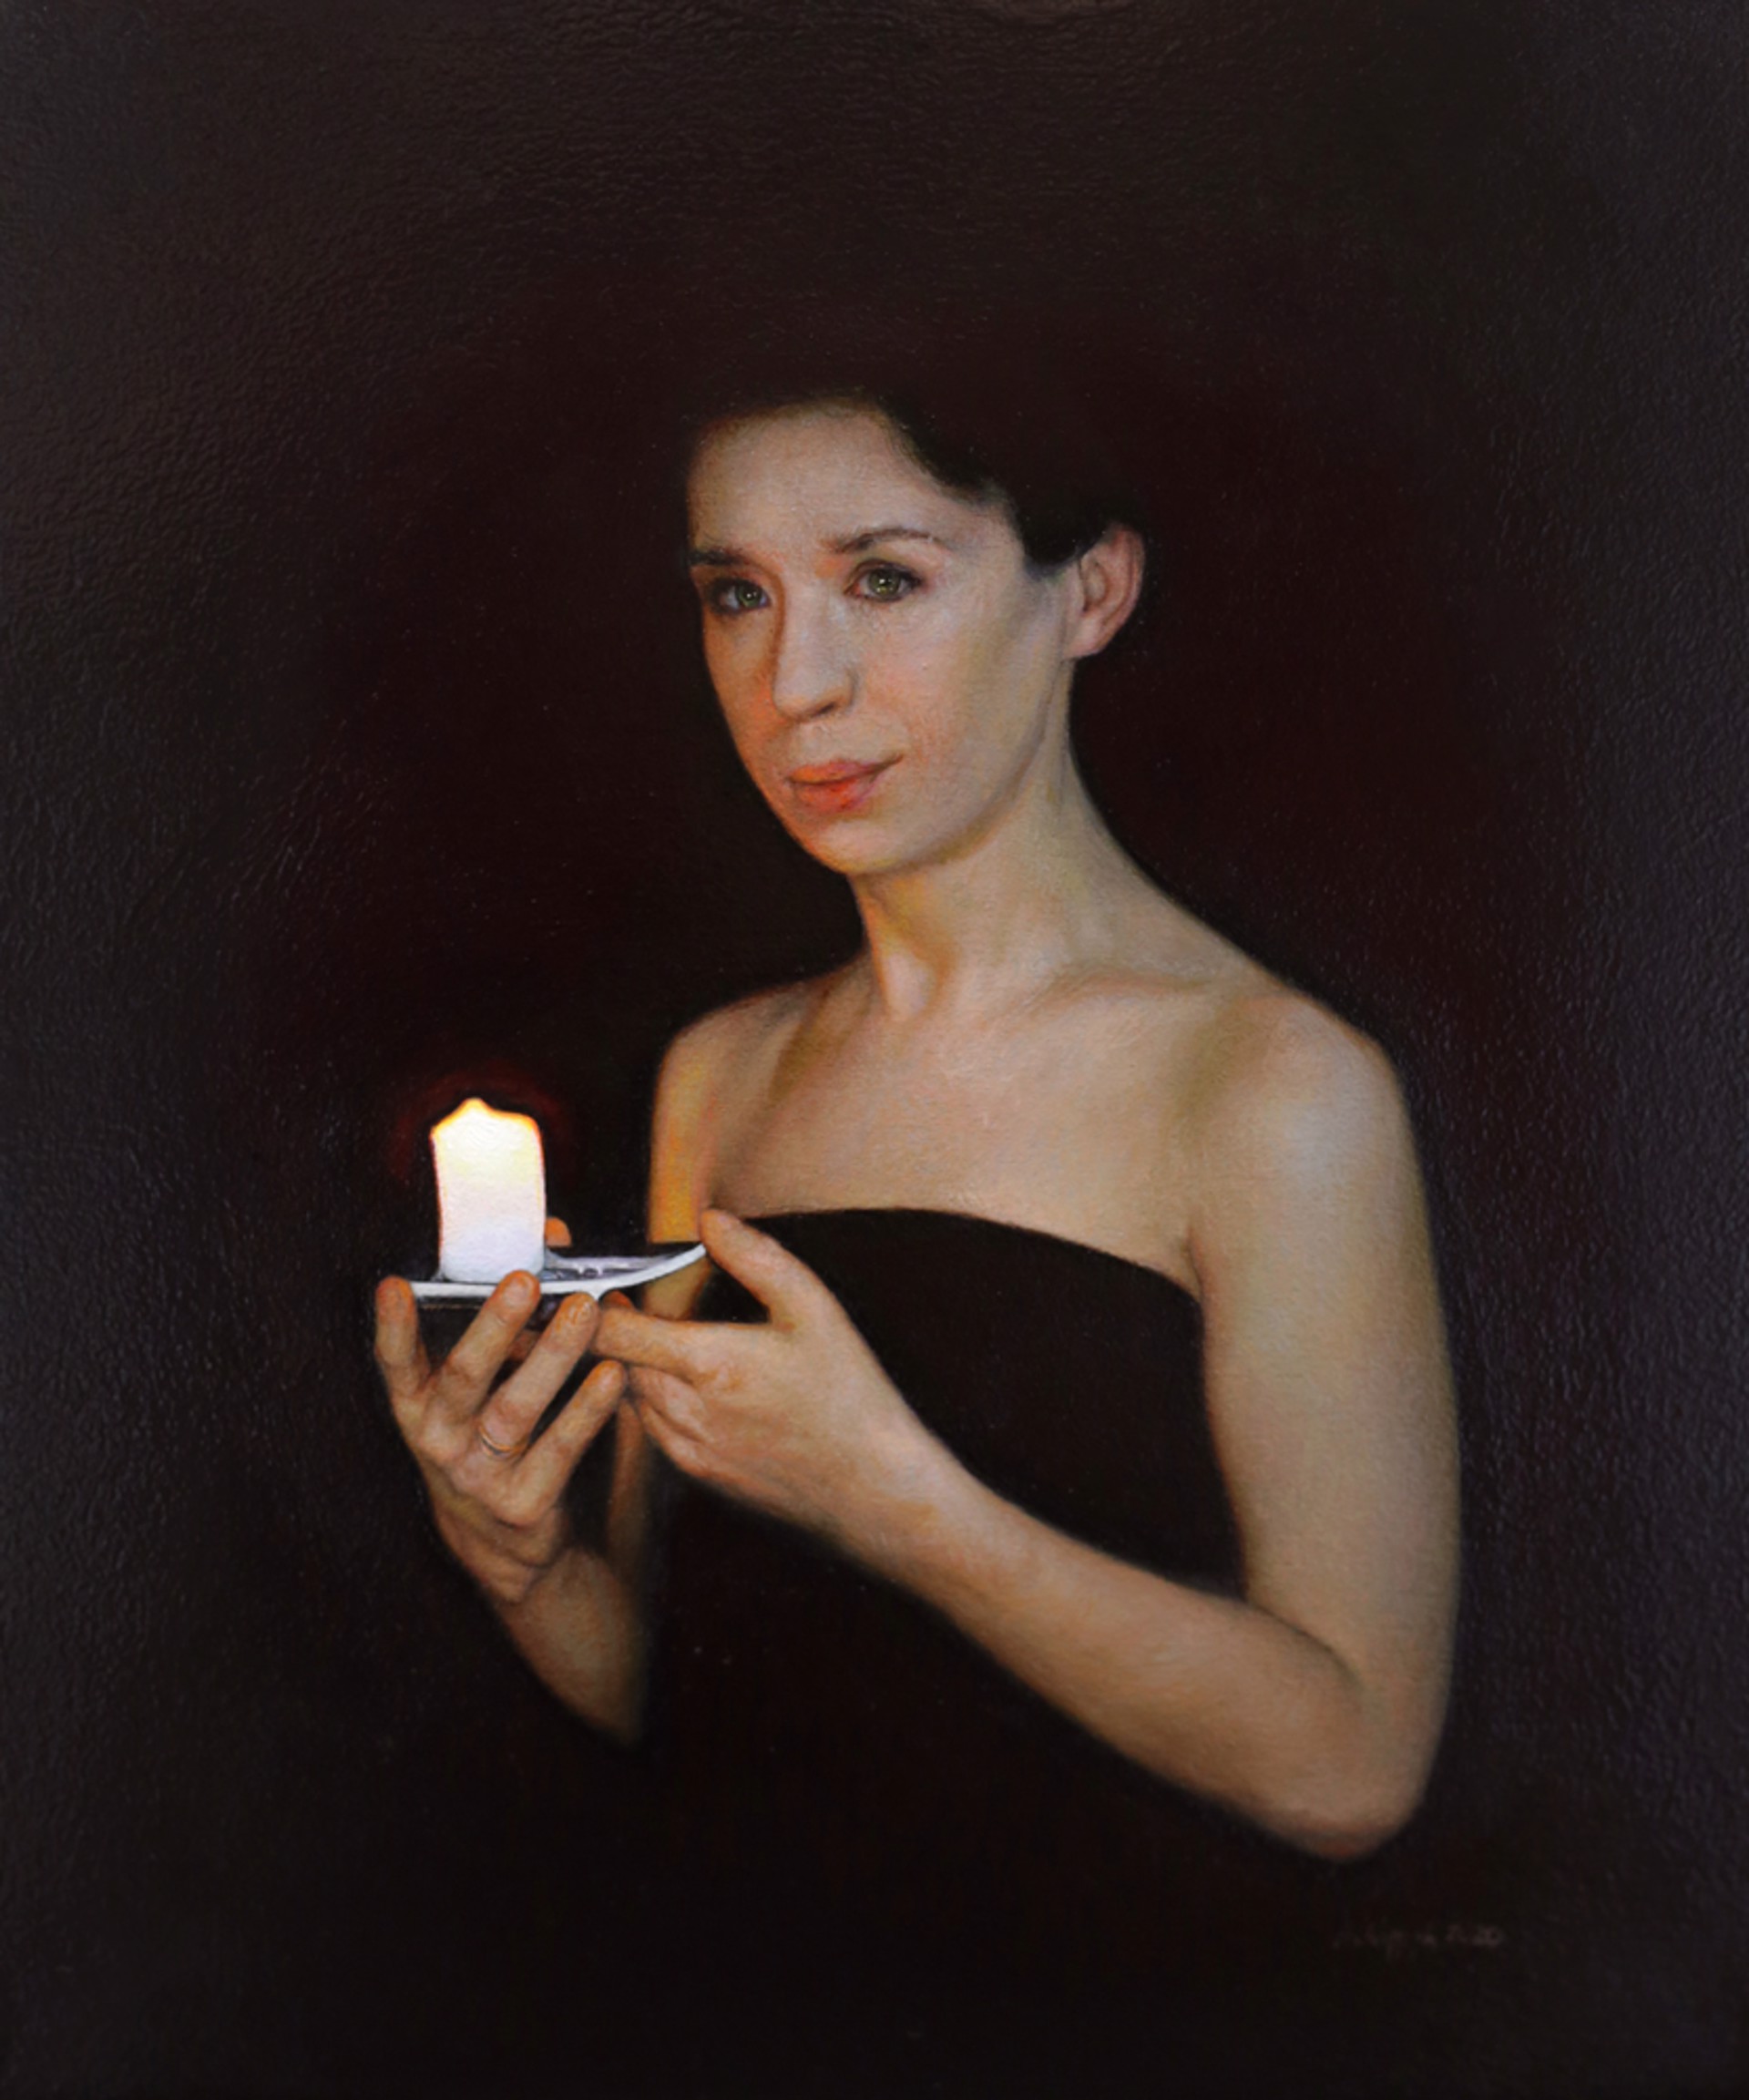 Own light by Anna Wypych